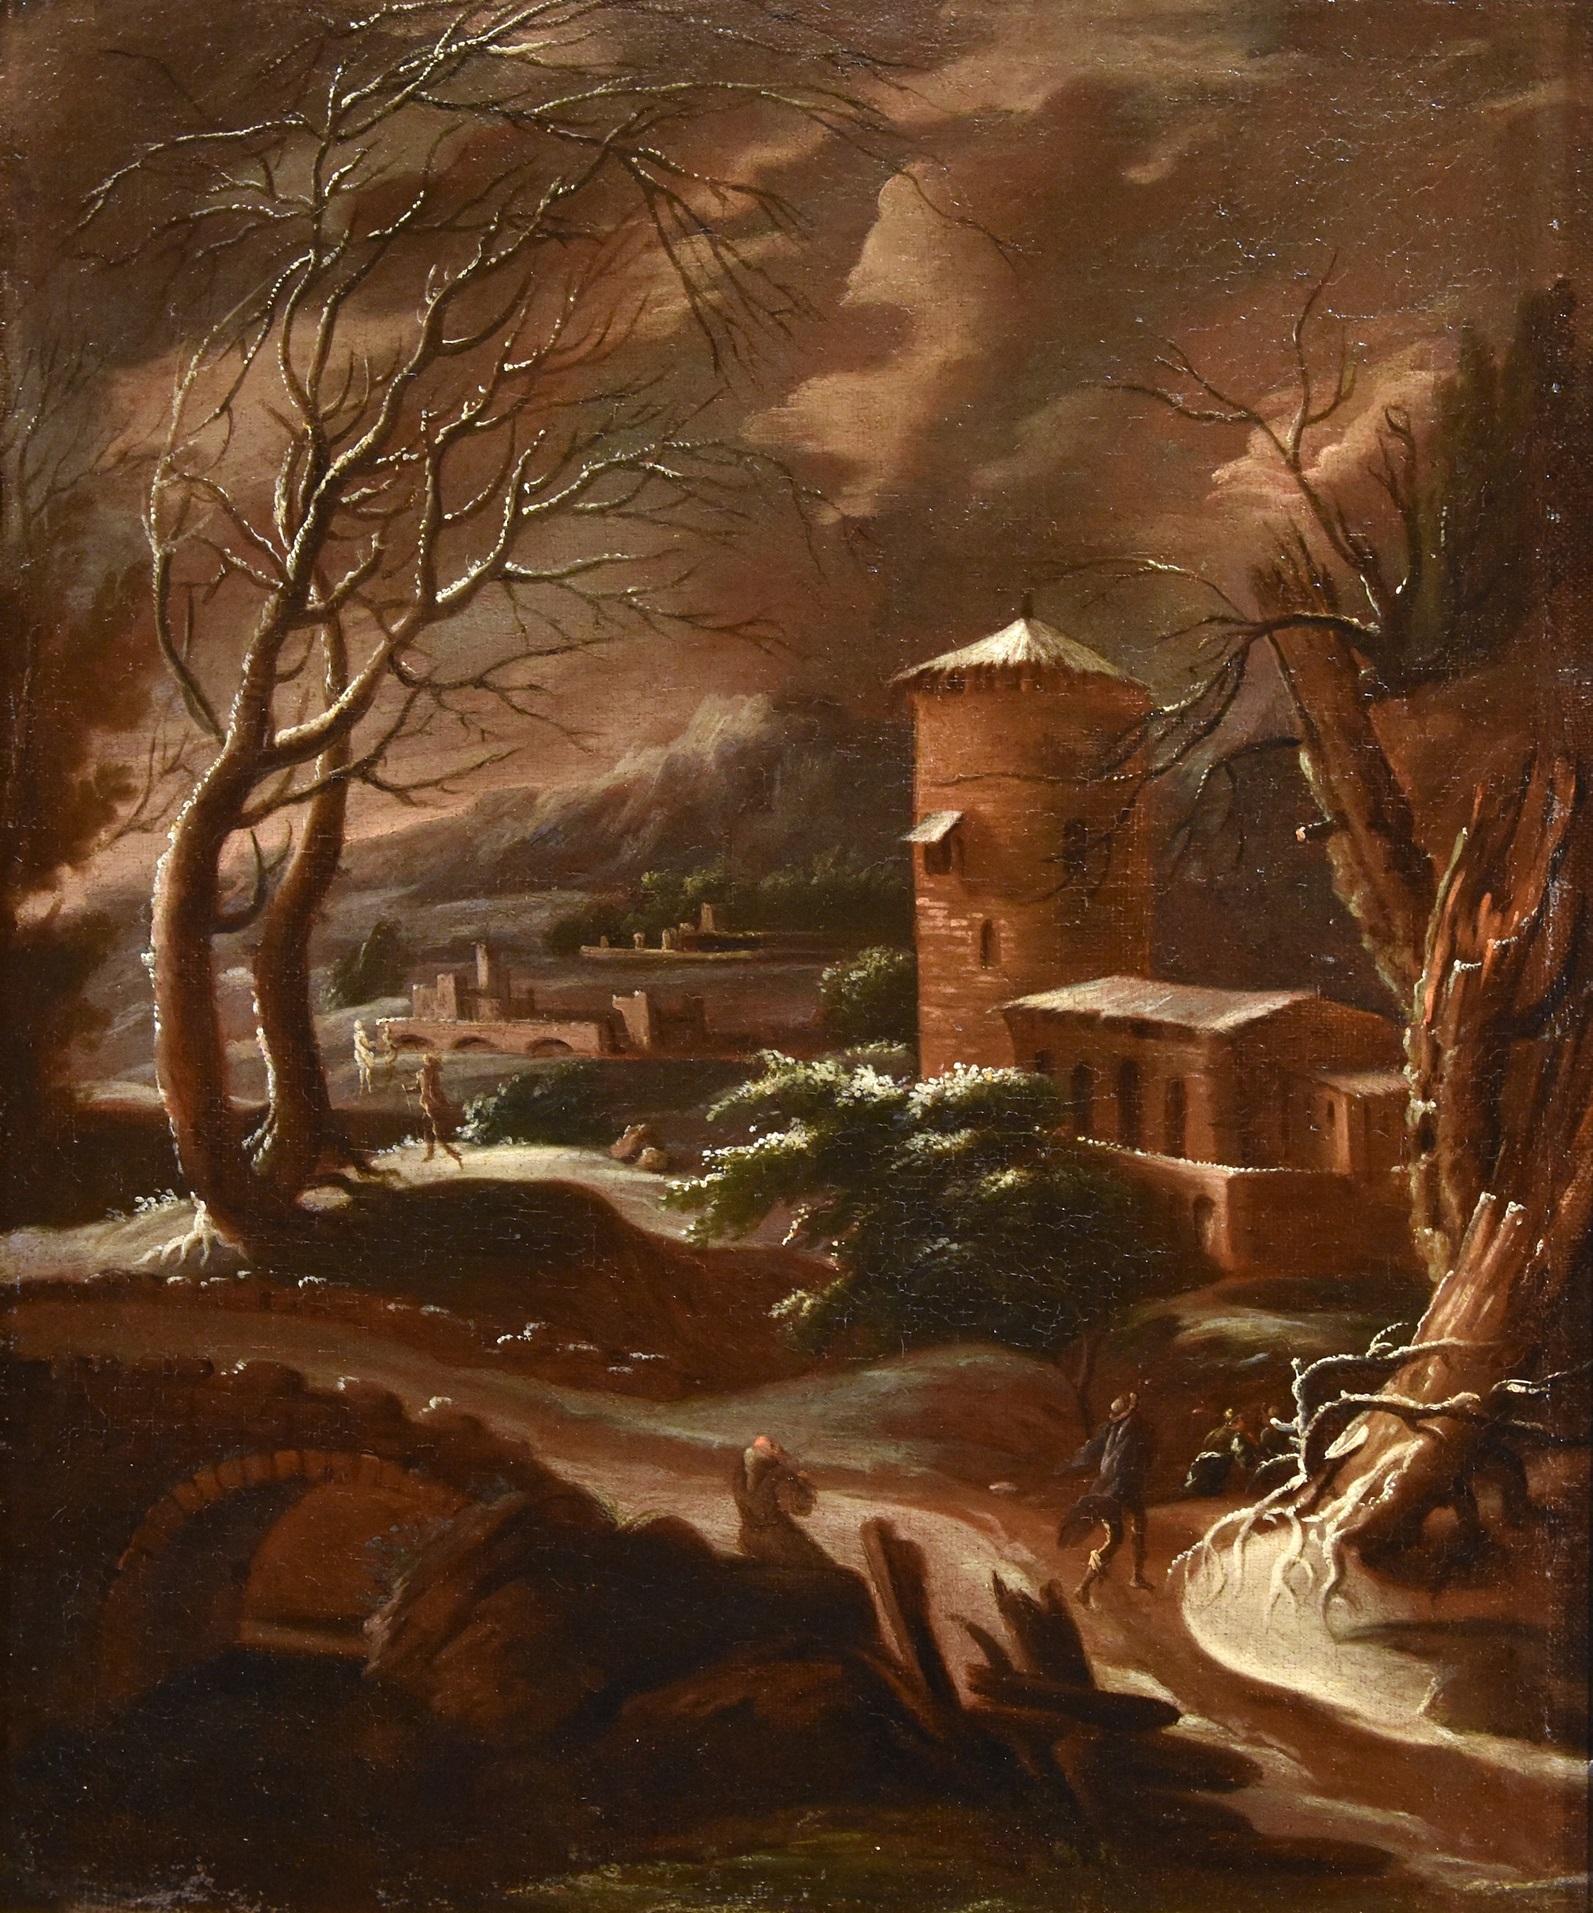 Winterlandschaft, Foschi, Gemälde, 18. Jahrhundert, CEntury, Öl auf Leinwand, Alter Meister, Italien – Painting von  Francesco Foschi (ancona, 1710 - Rome, 1780) 